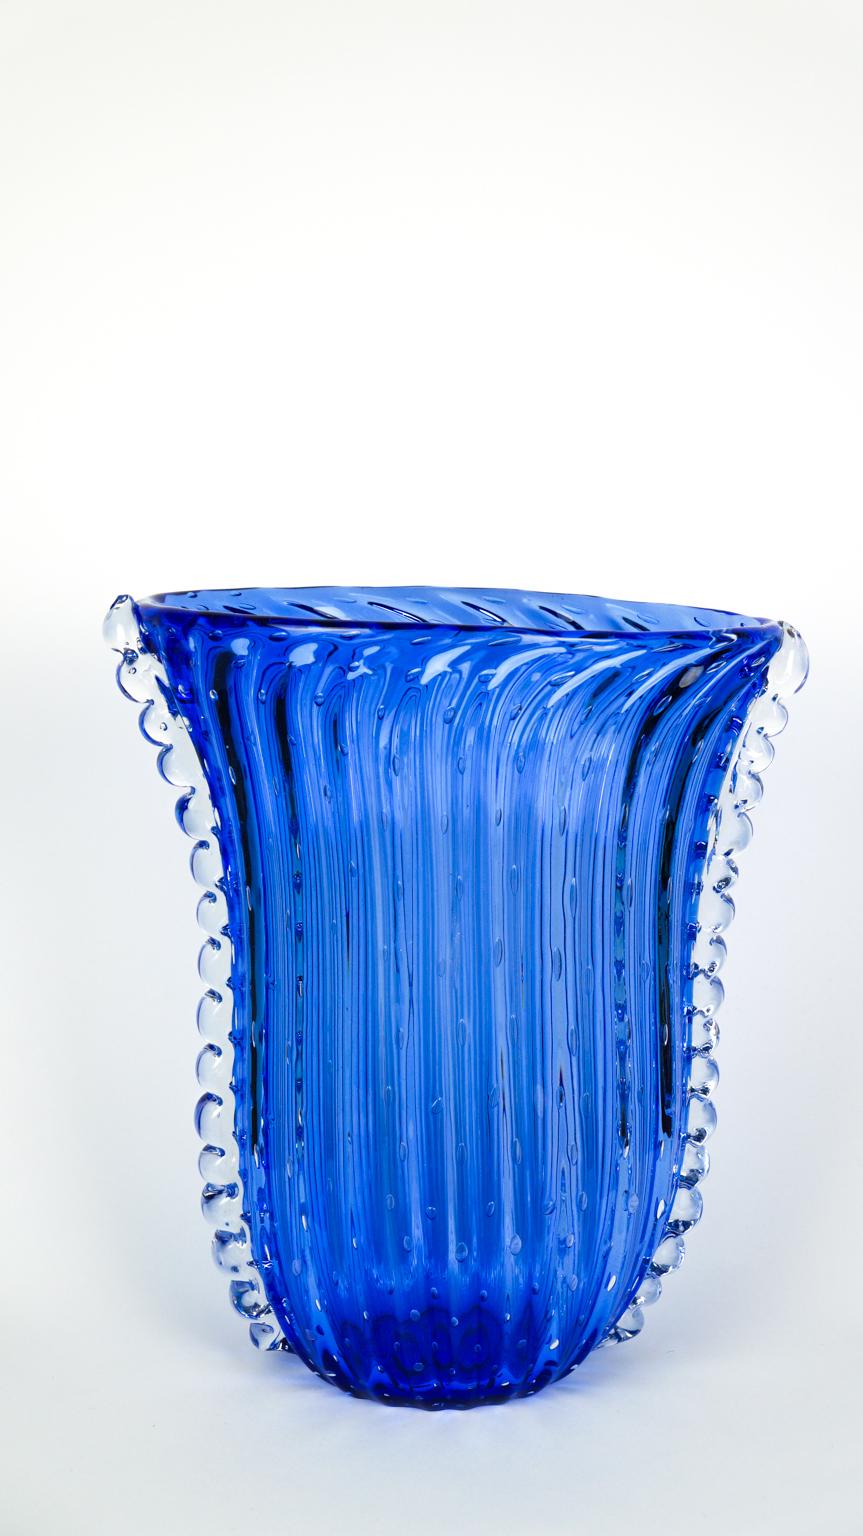 Art Deco Contemporary Crystal Blue Design Italian Art Glass Vase Baloton Murano Glass Jar For Sale